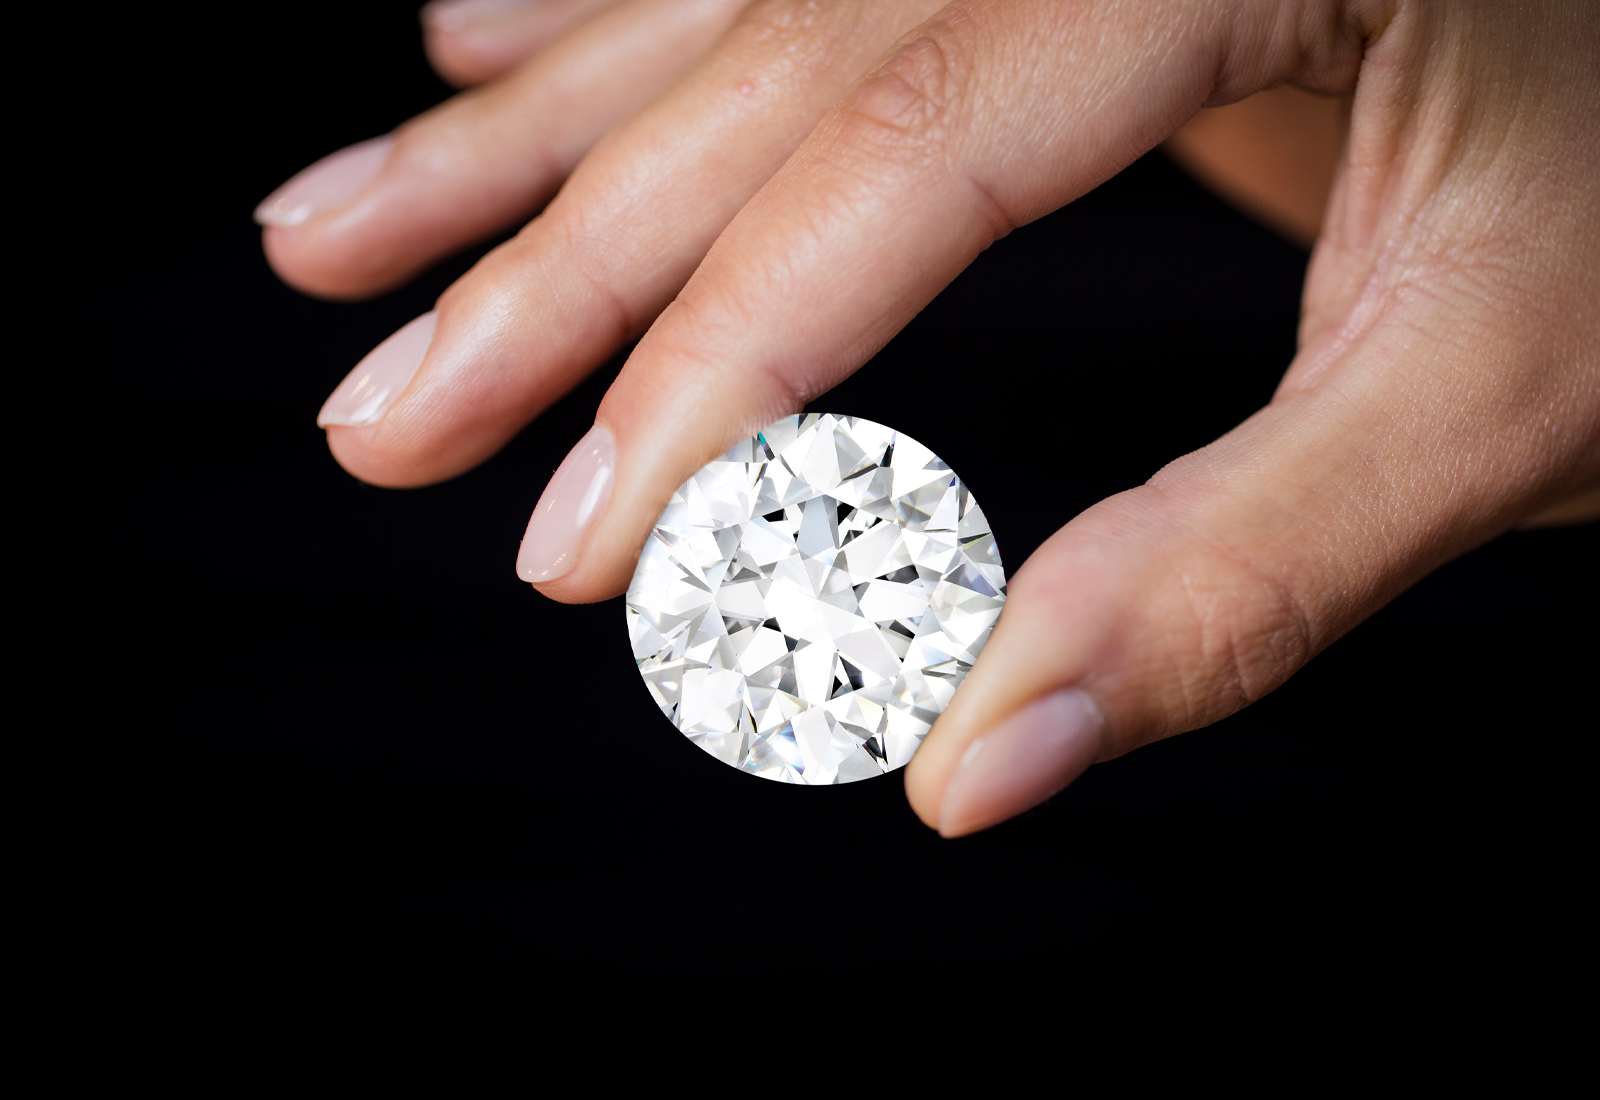 The 102.34ct Internally Flawless, 'D' colour diamond